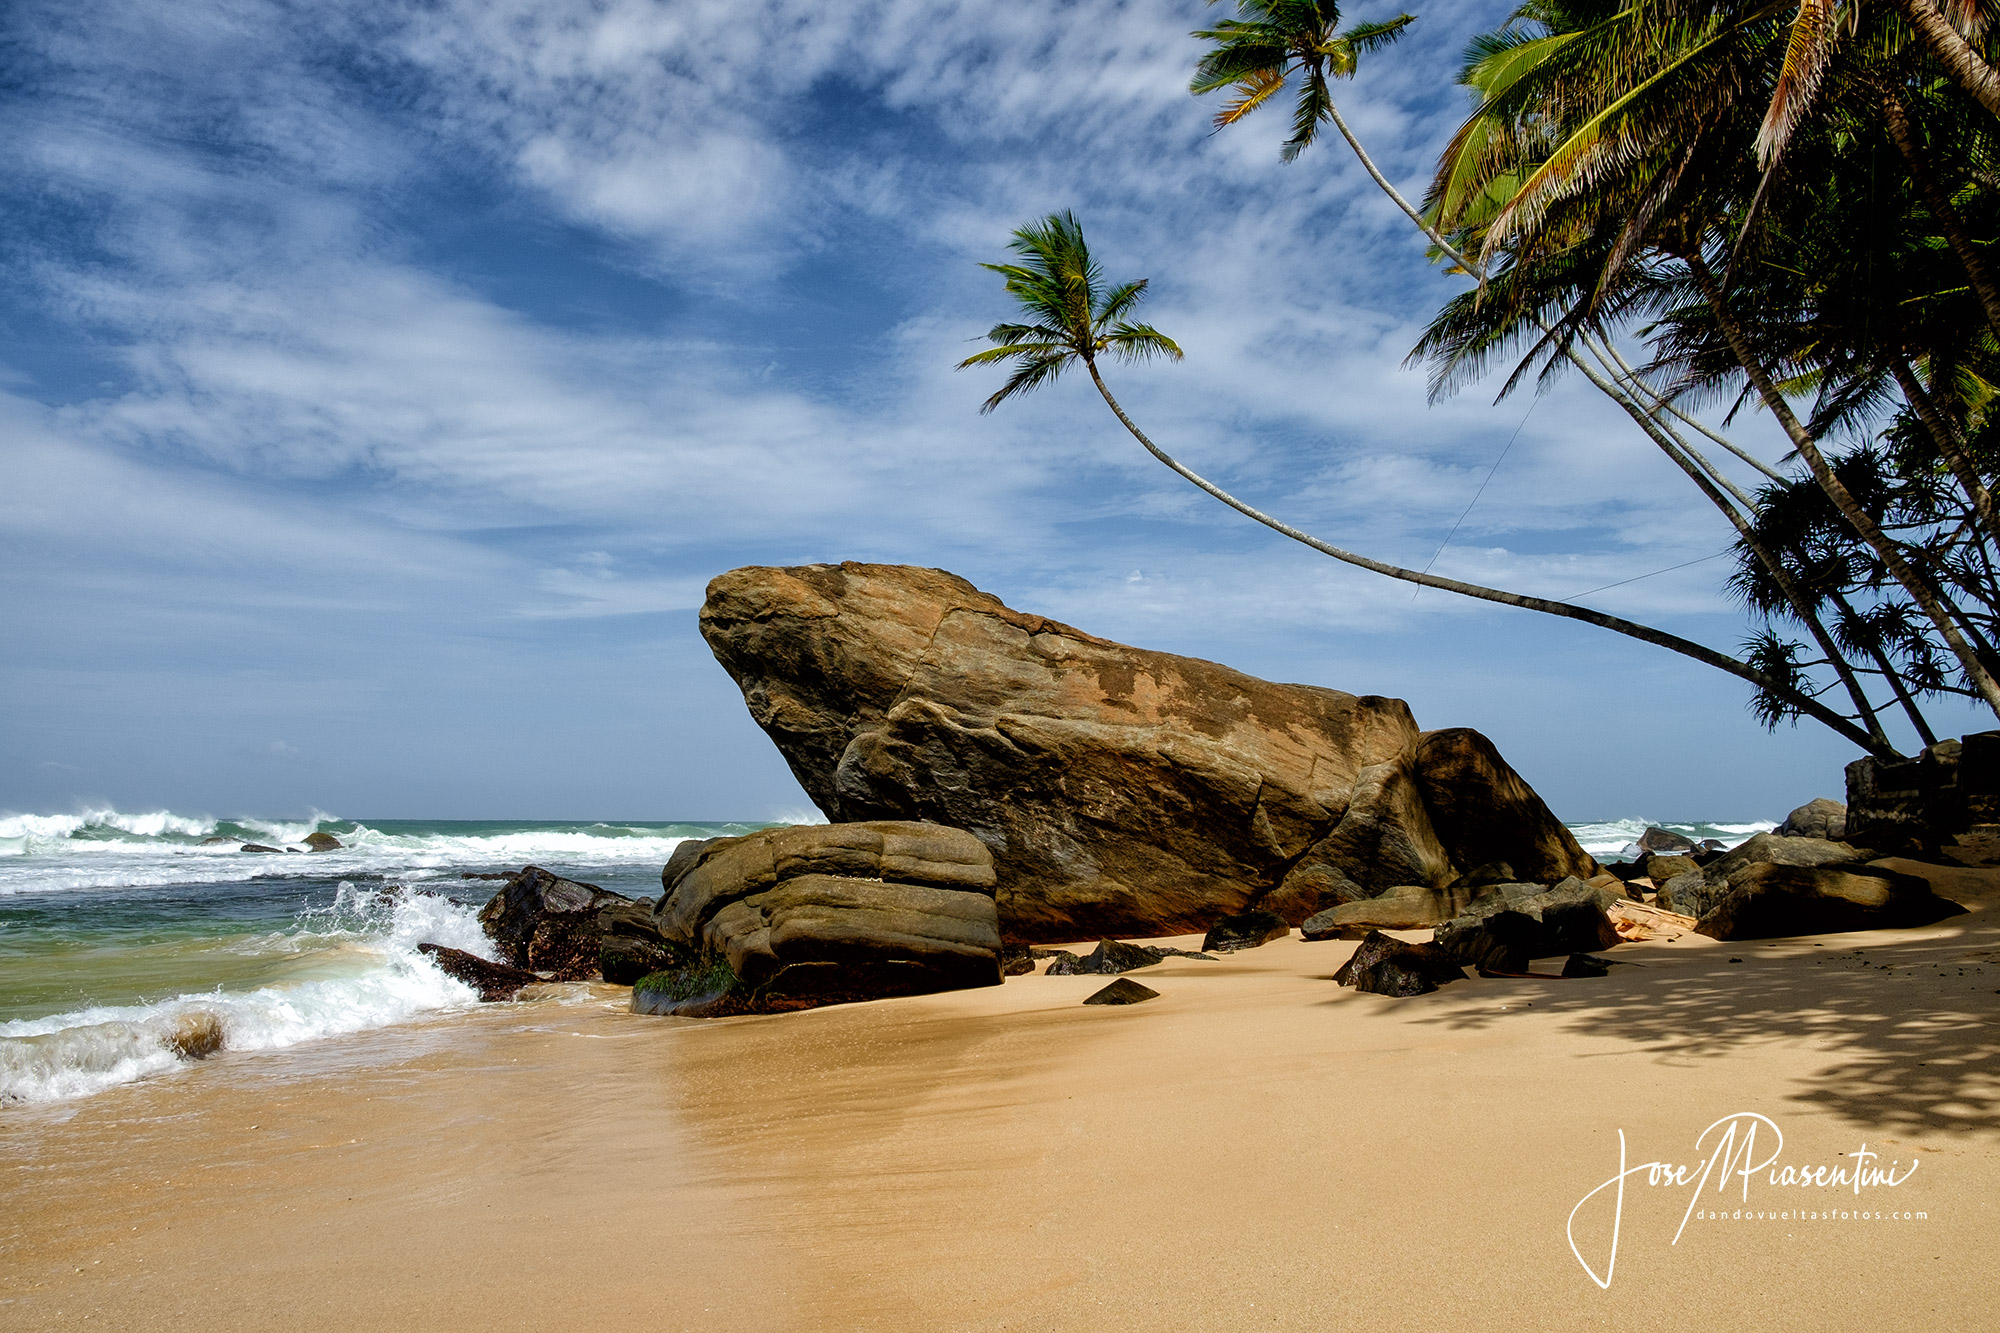 Wijaya beach Sri Lanka